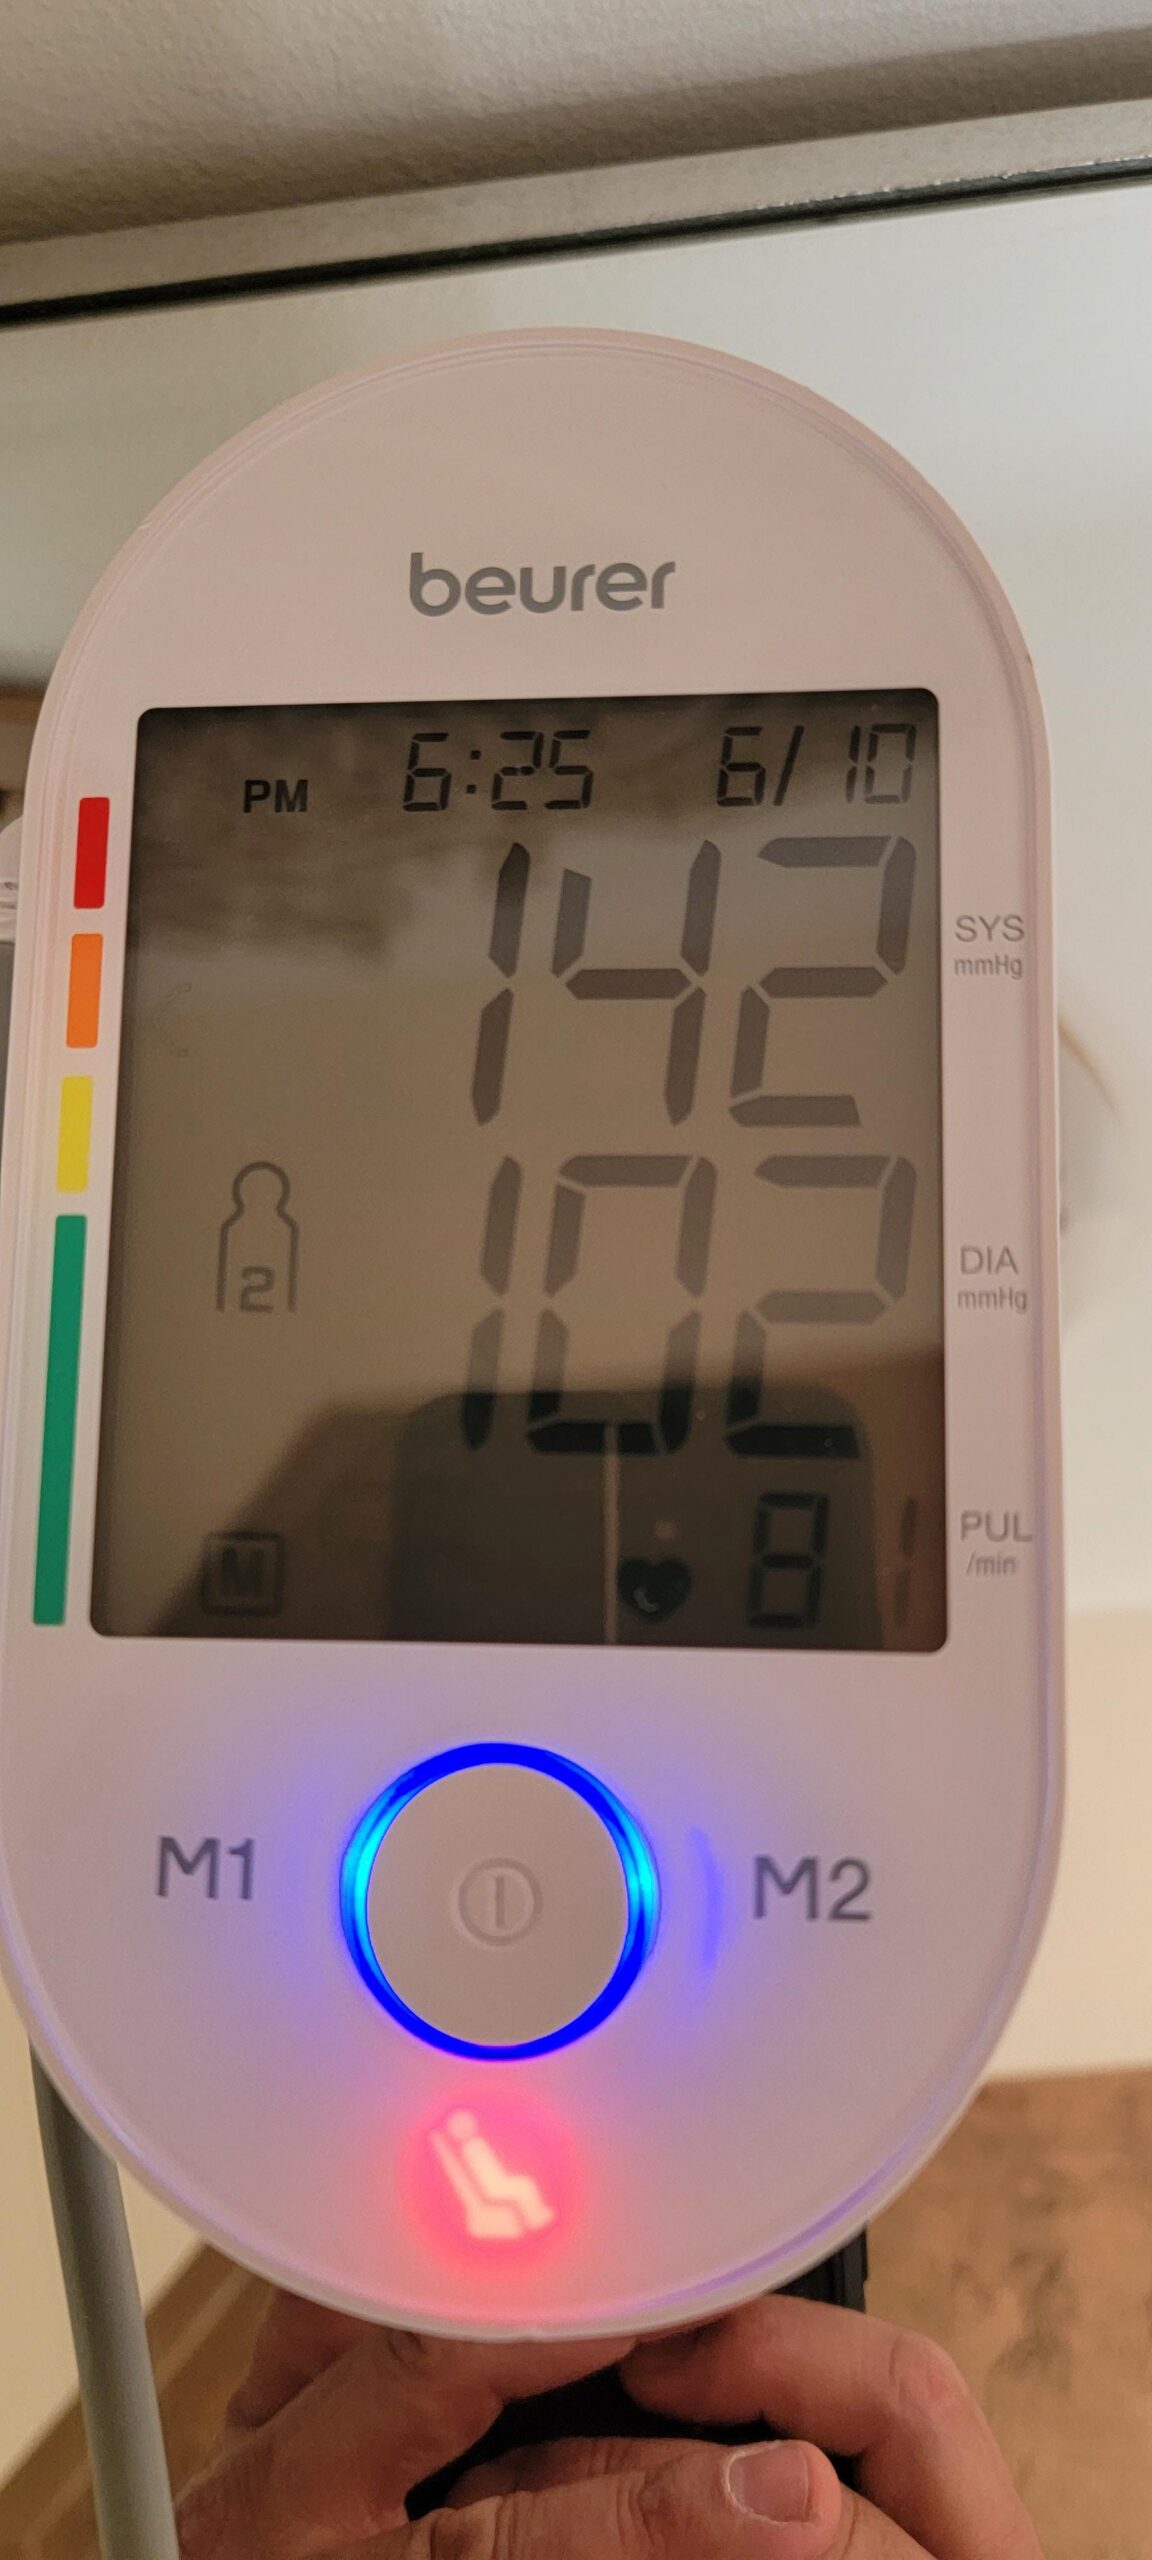 Beurer Blood Pressure Monitor Not Working